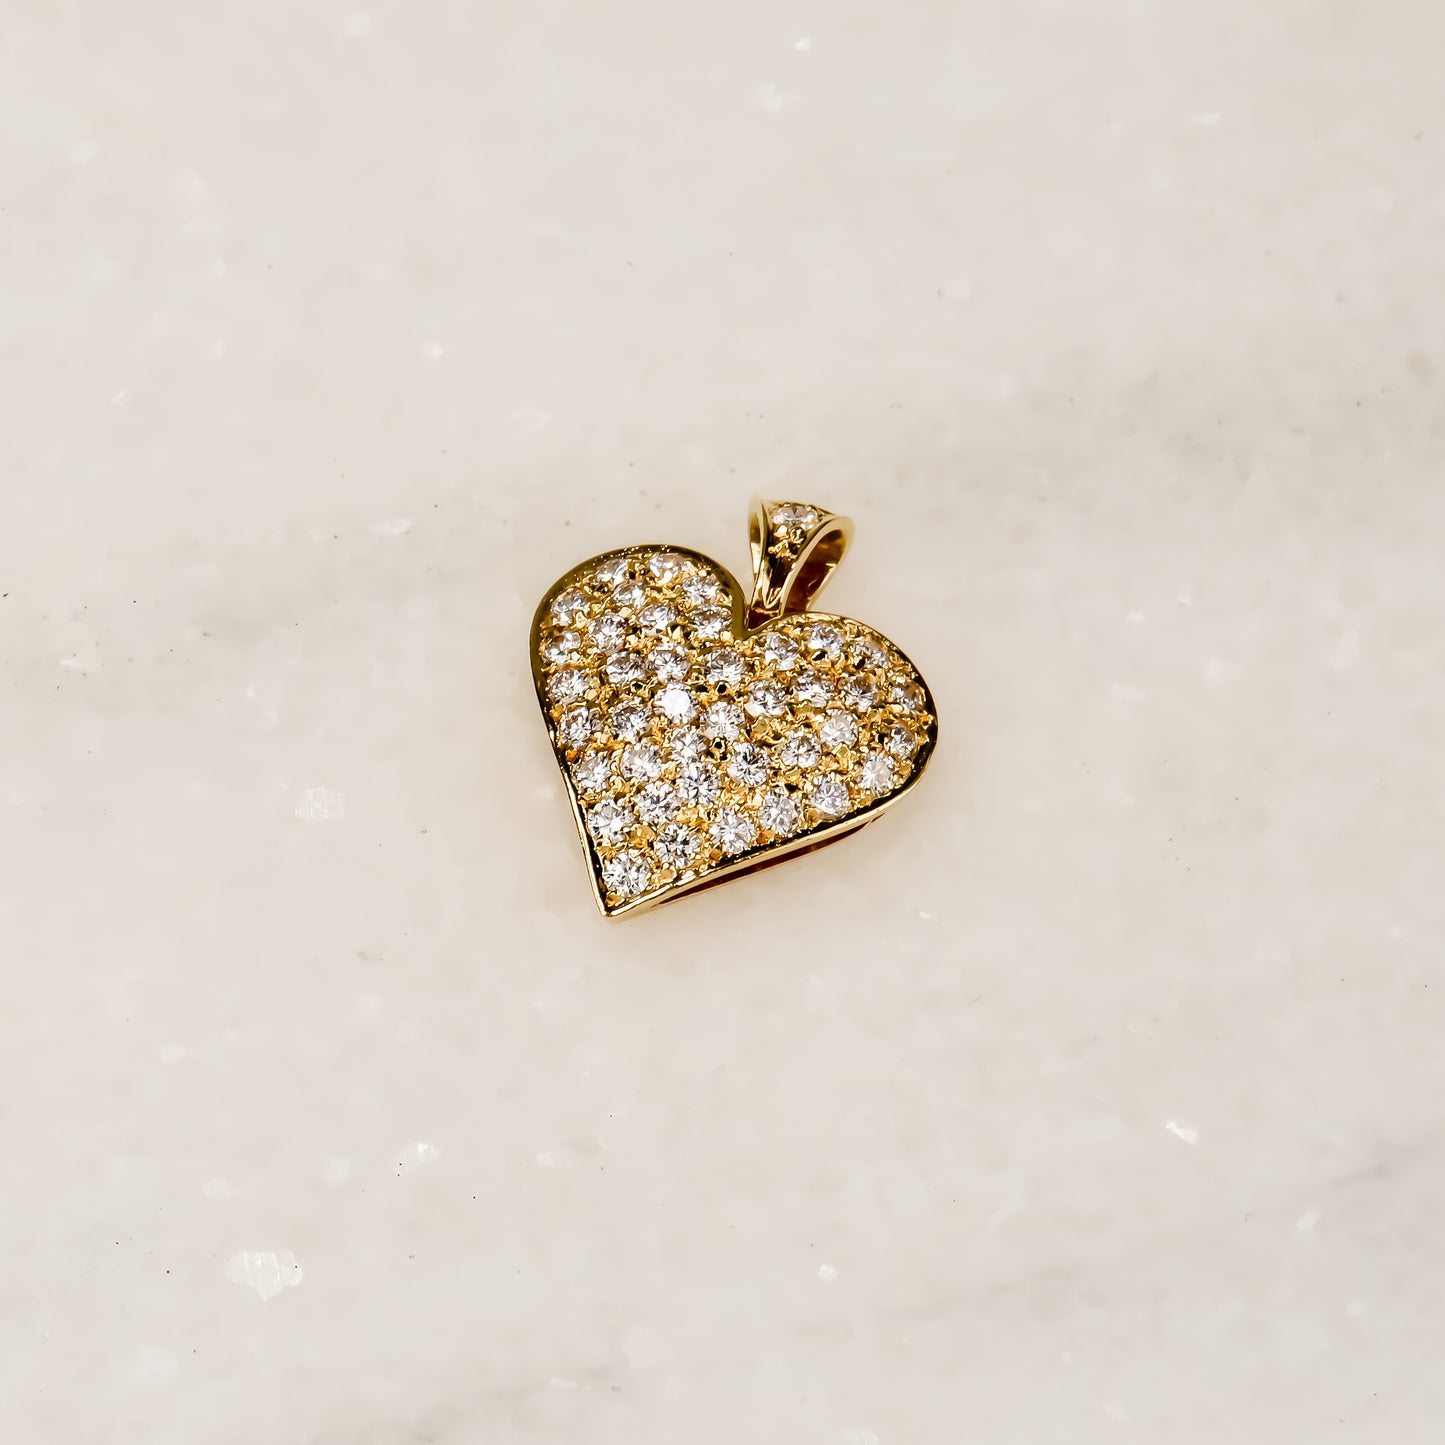 Fantastic heart pendant with brilliantly 18 karat gold